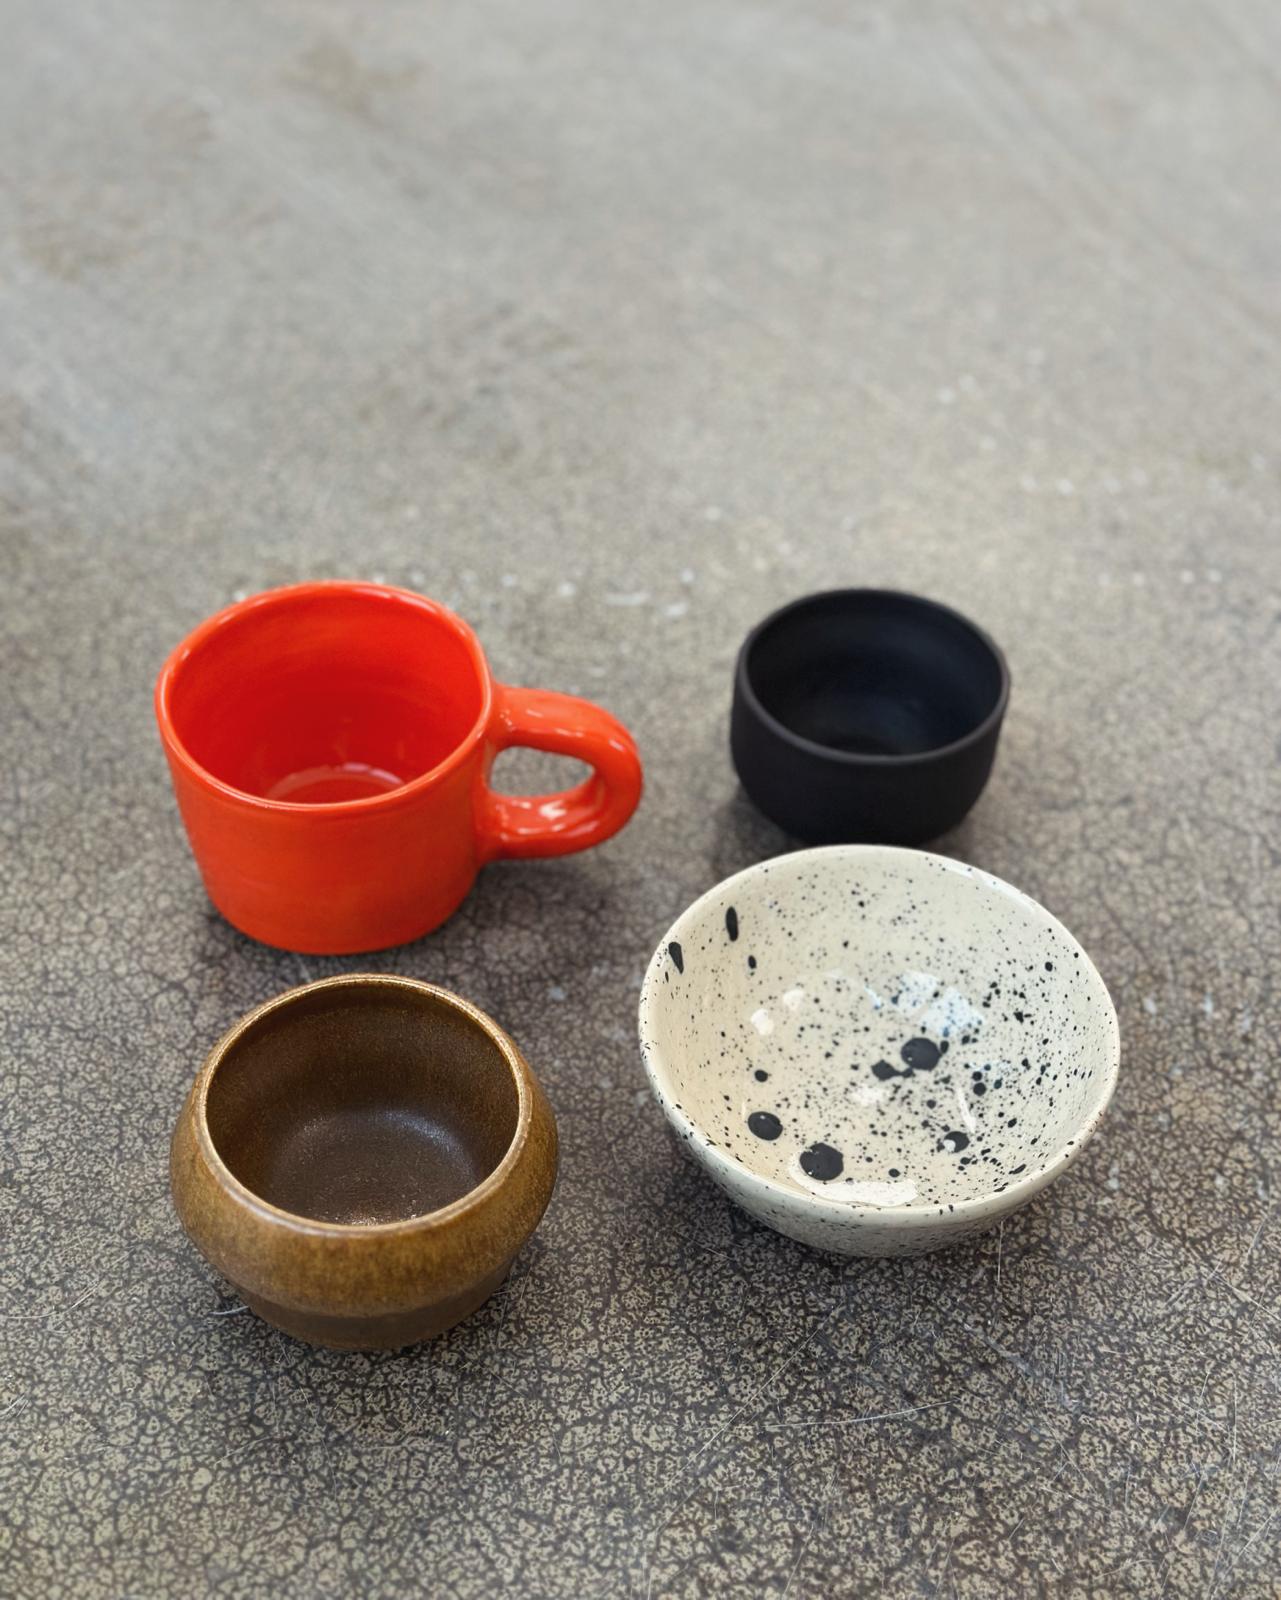 studioli!sa x wabi:sabi - the pottery studio 27.4./28.4. (Vormittag)